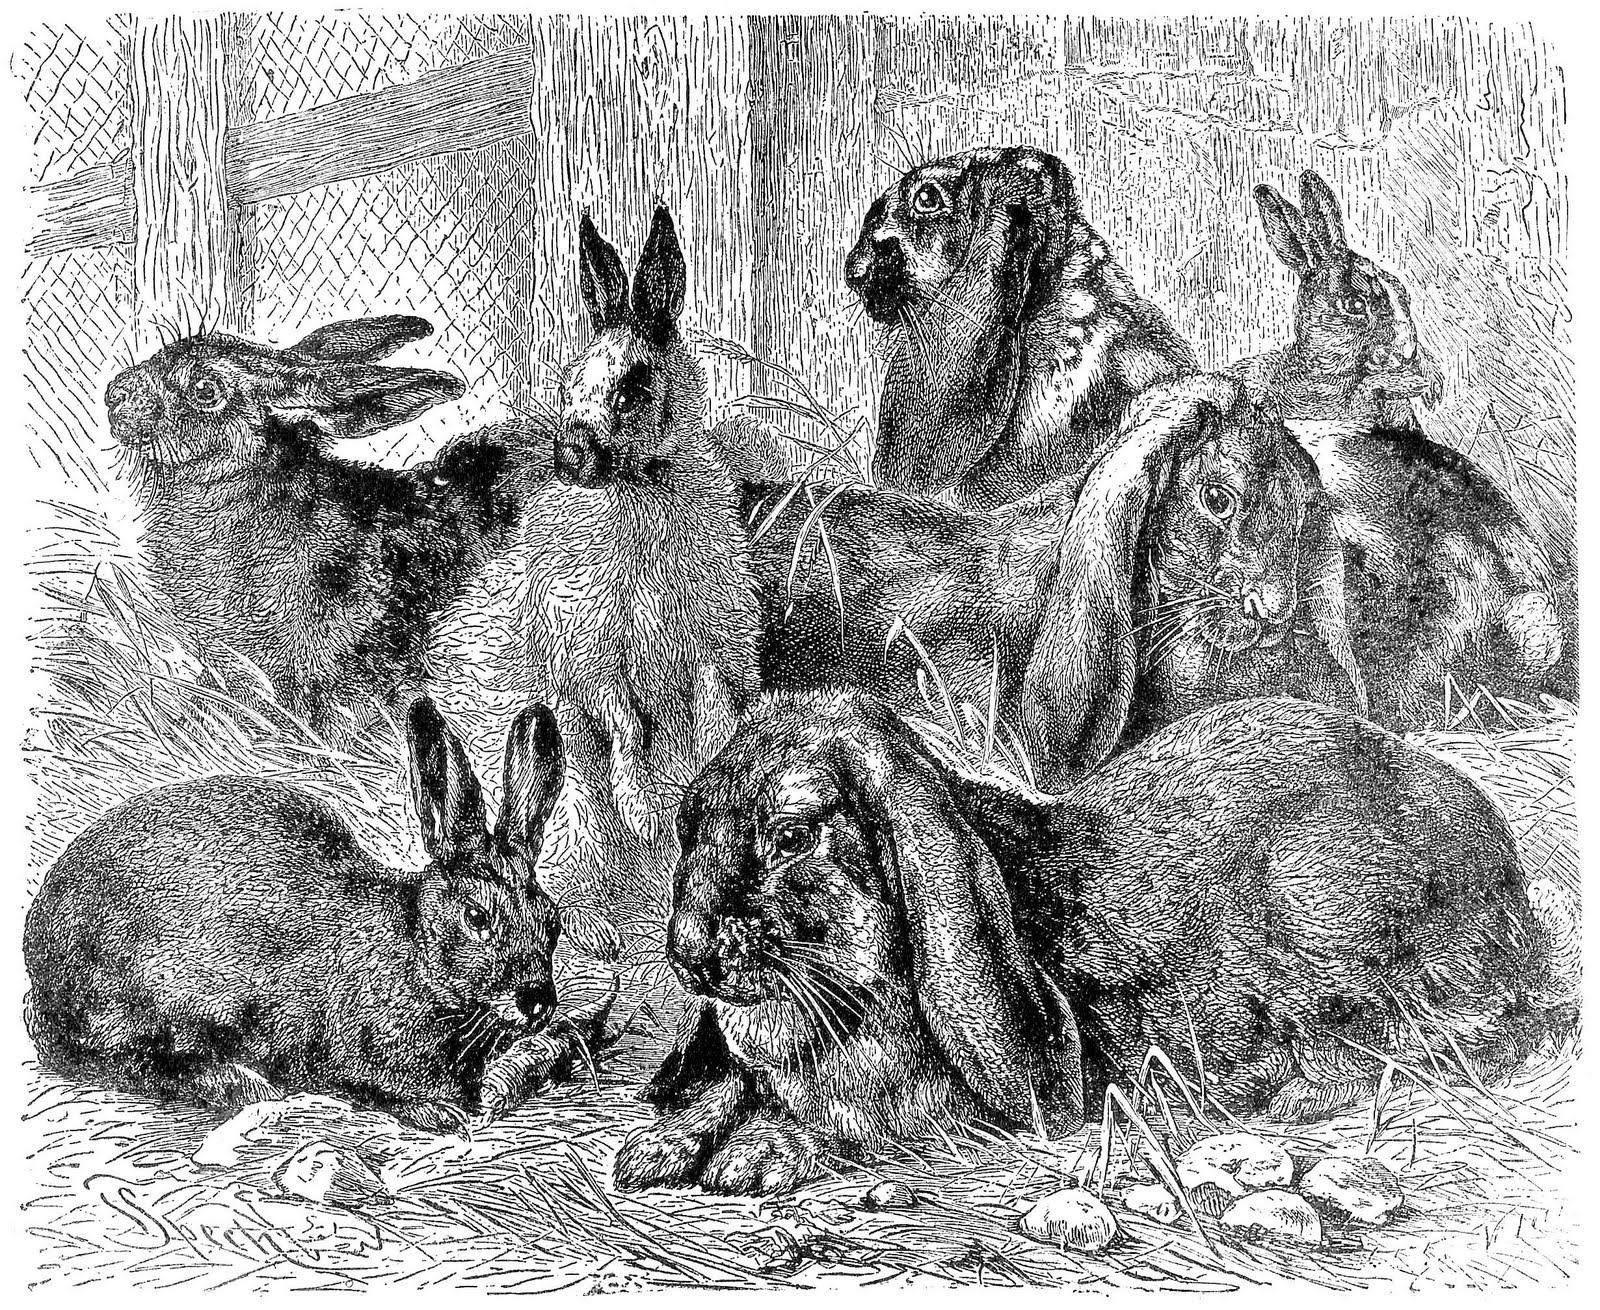 History Of Rabbits